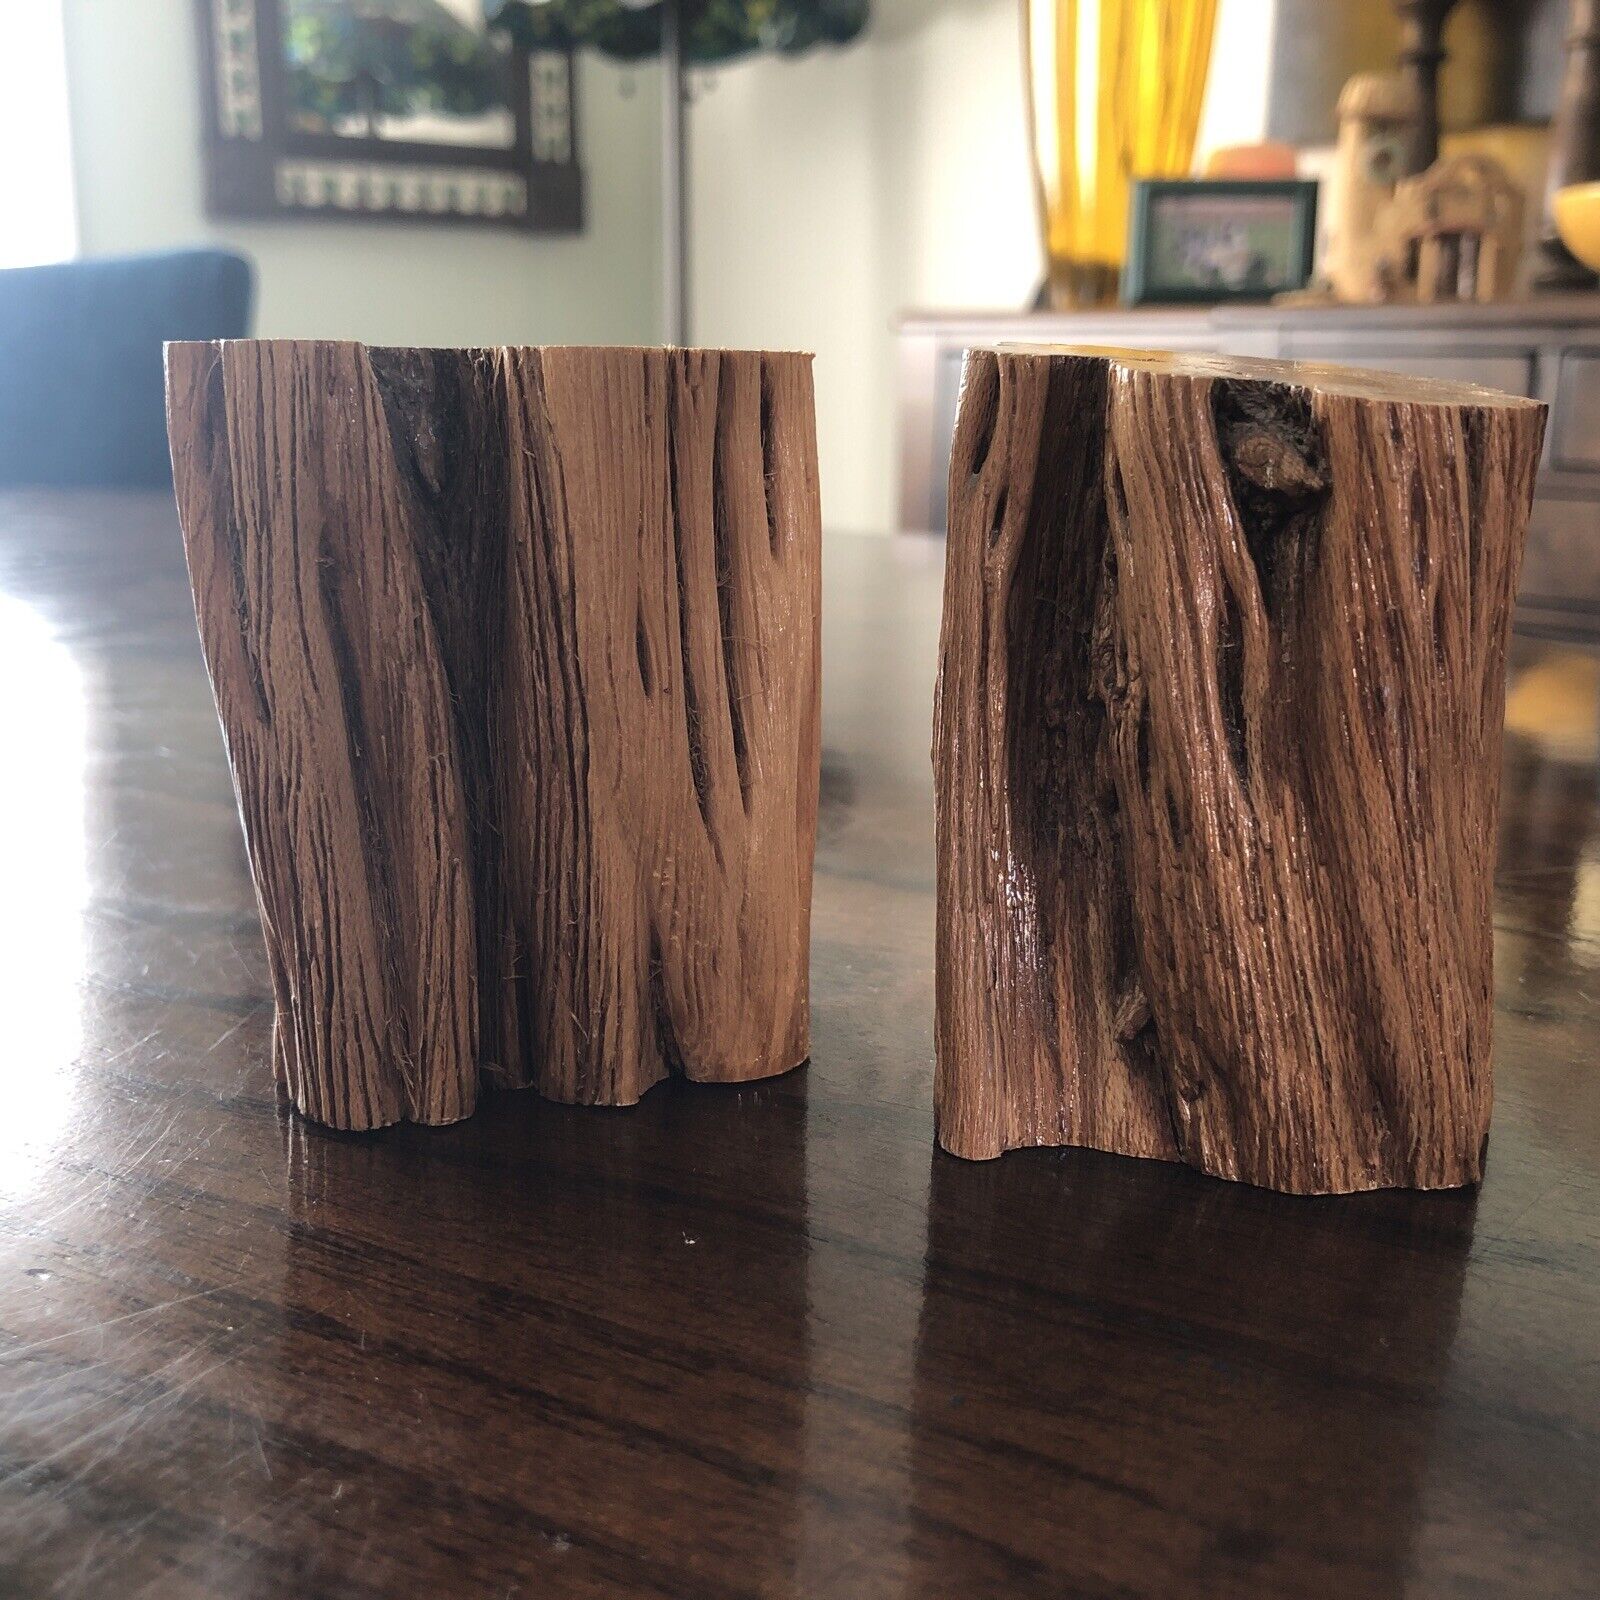 Sage wood from Oregon wooden salt & pepper shakers cork seal - Great Shape